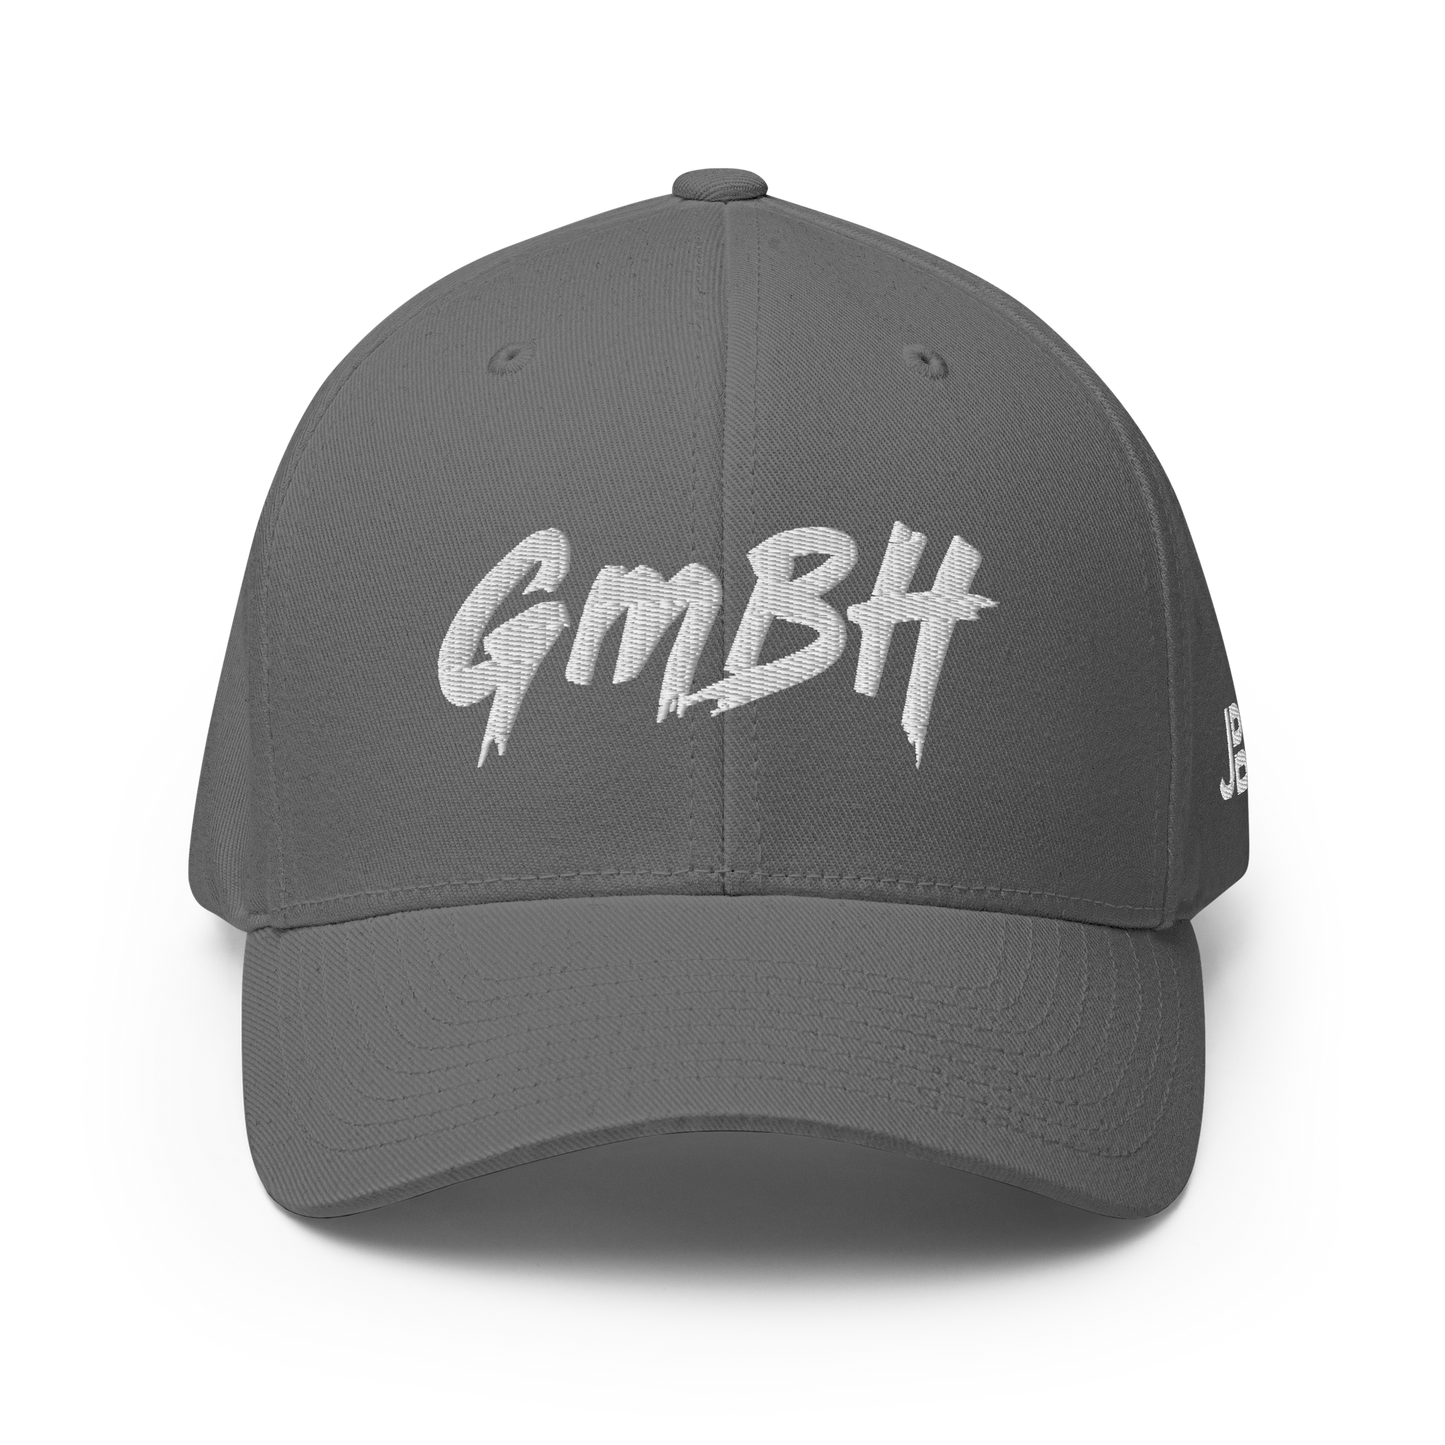 GMBH - Flexfit Cap